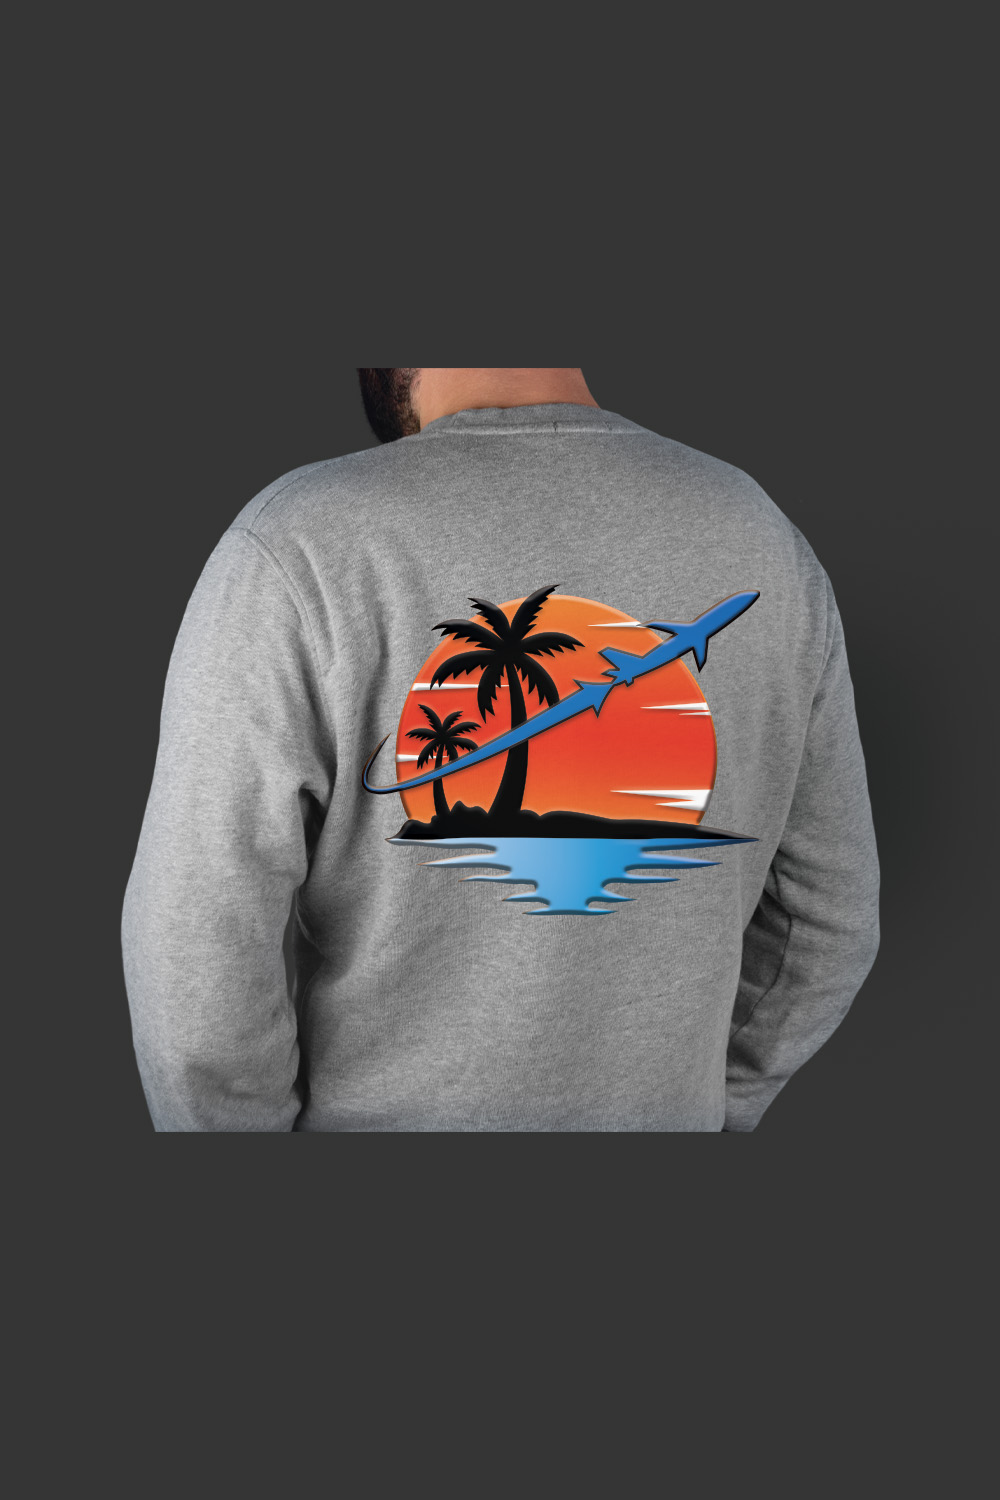 T -Shirt Sunset Beach and Airline Design Bundle pinterest image.